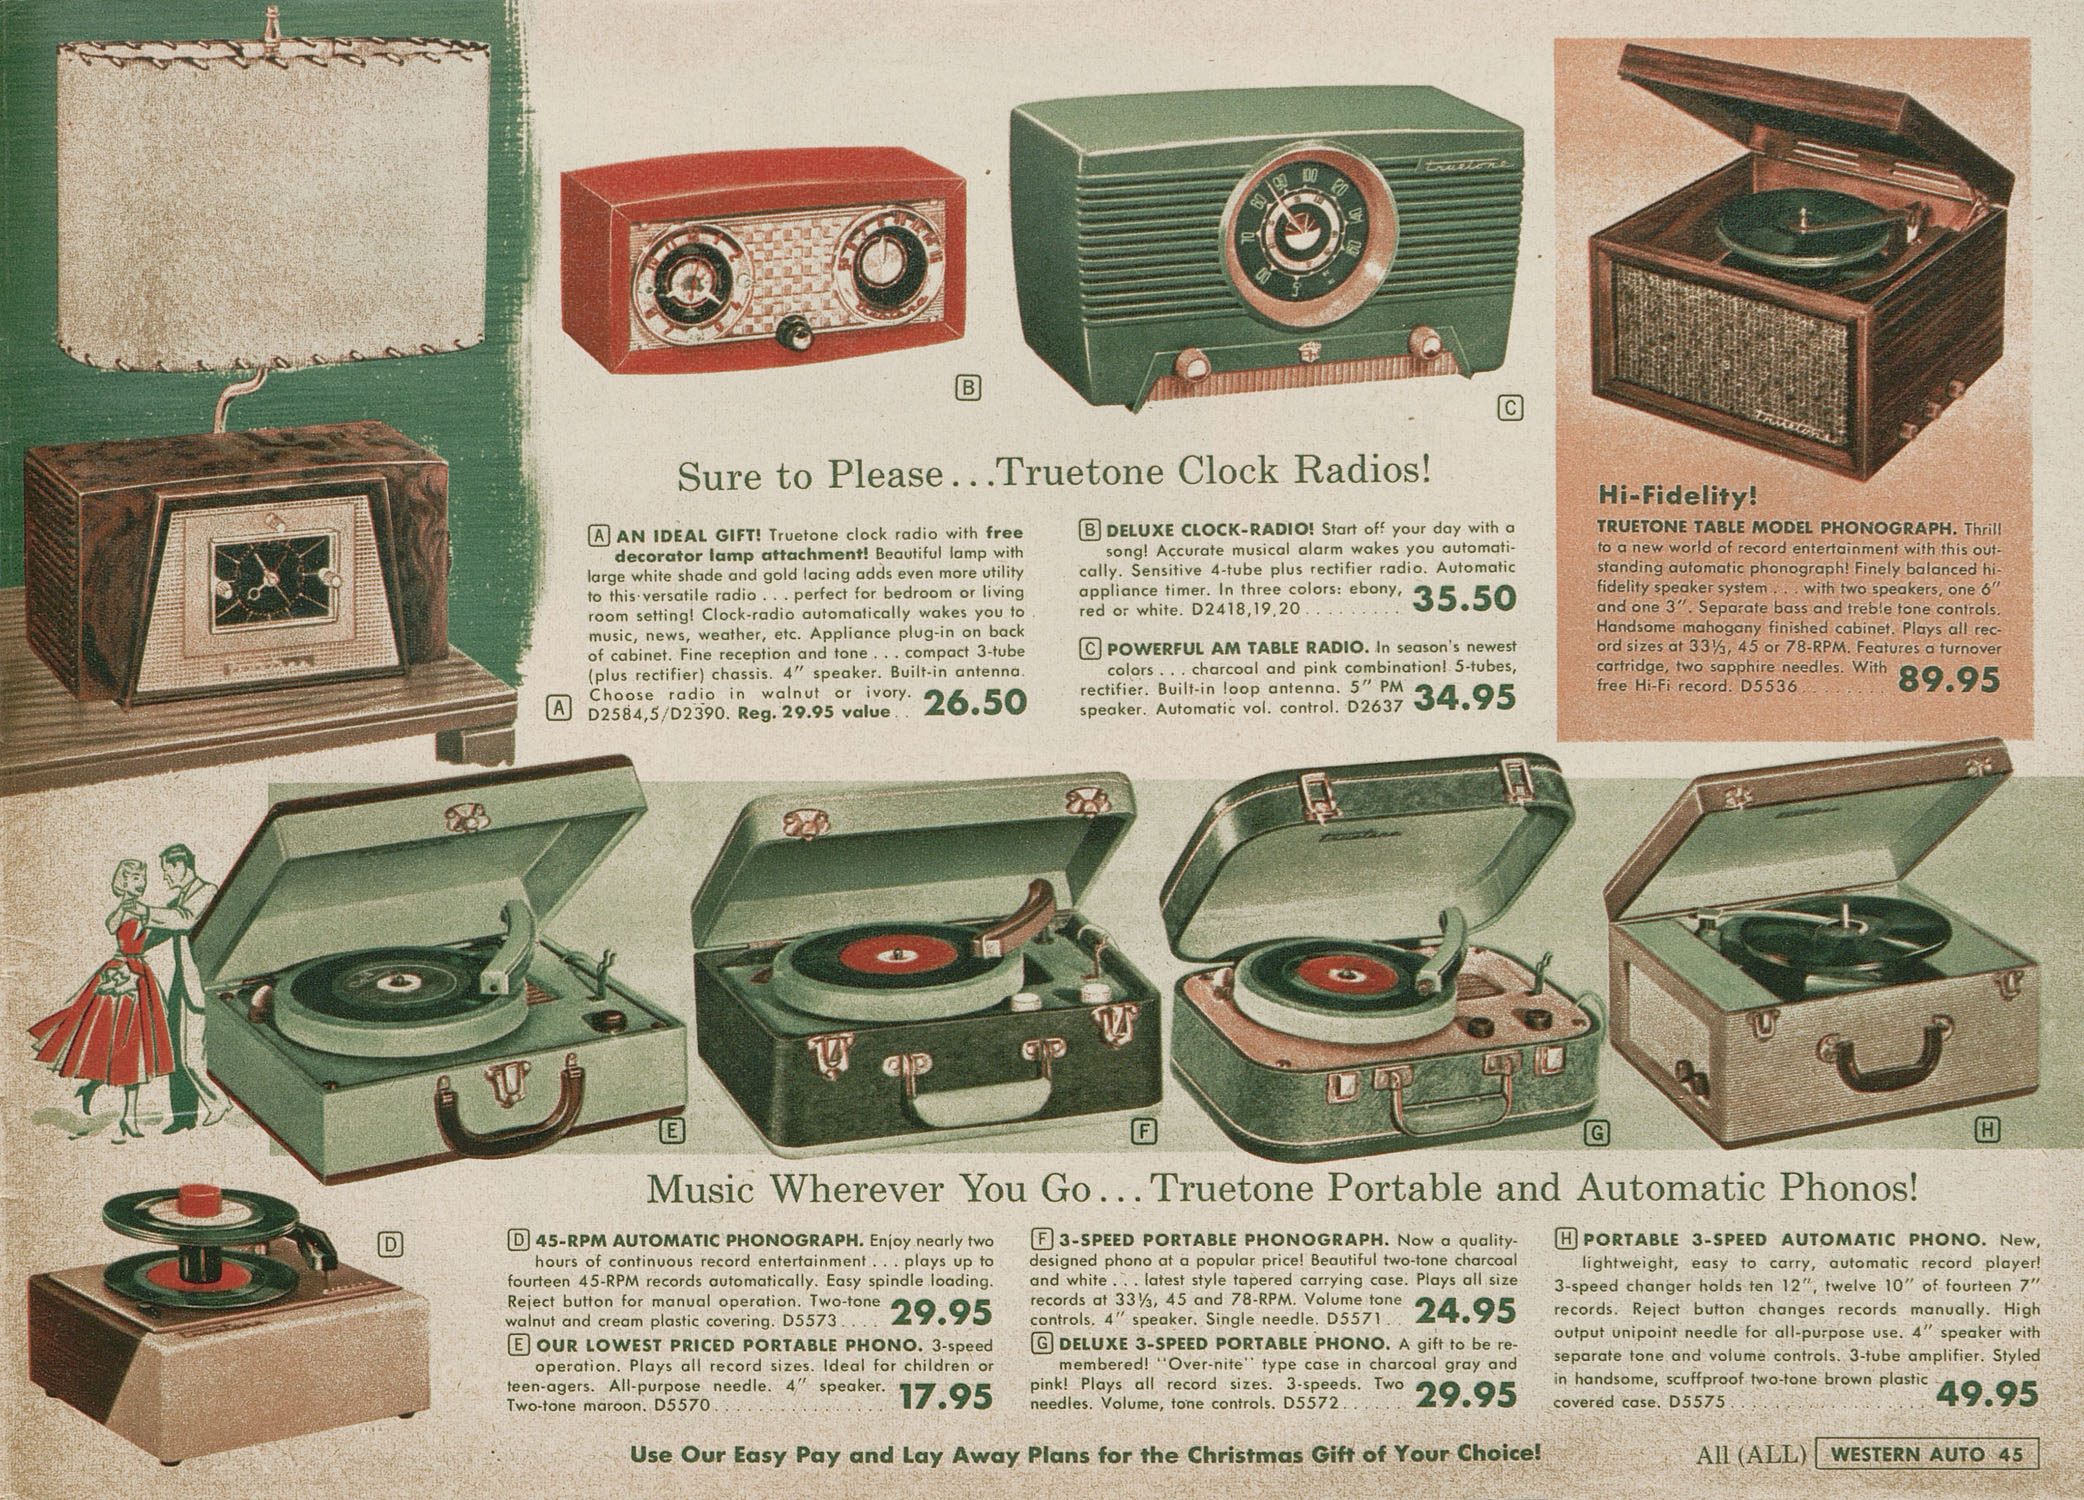 Western Auto Truetone Radios ad 1951